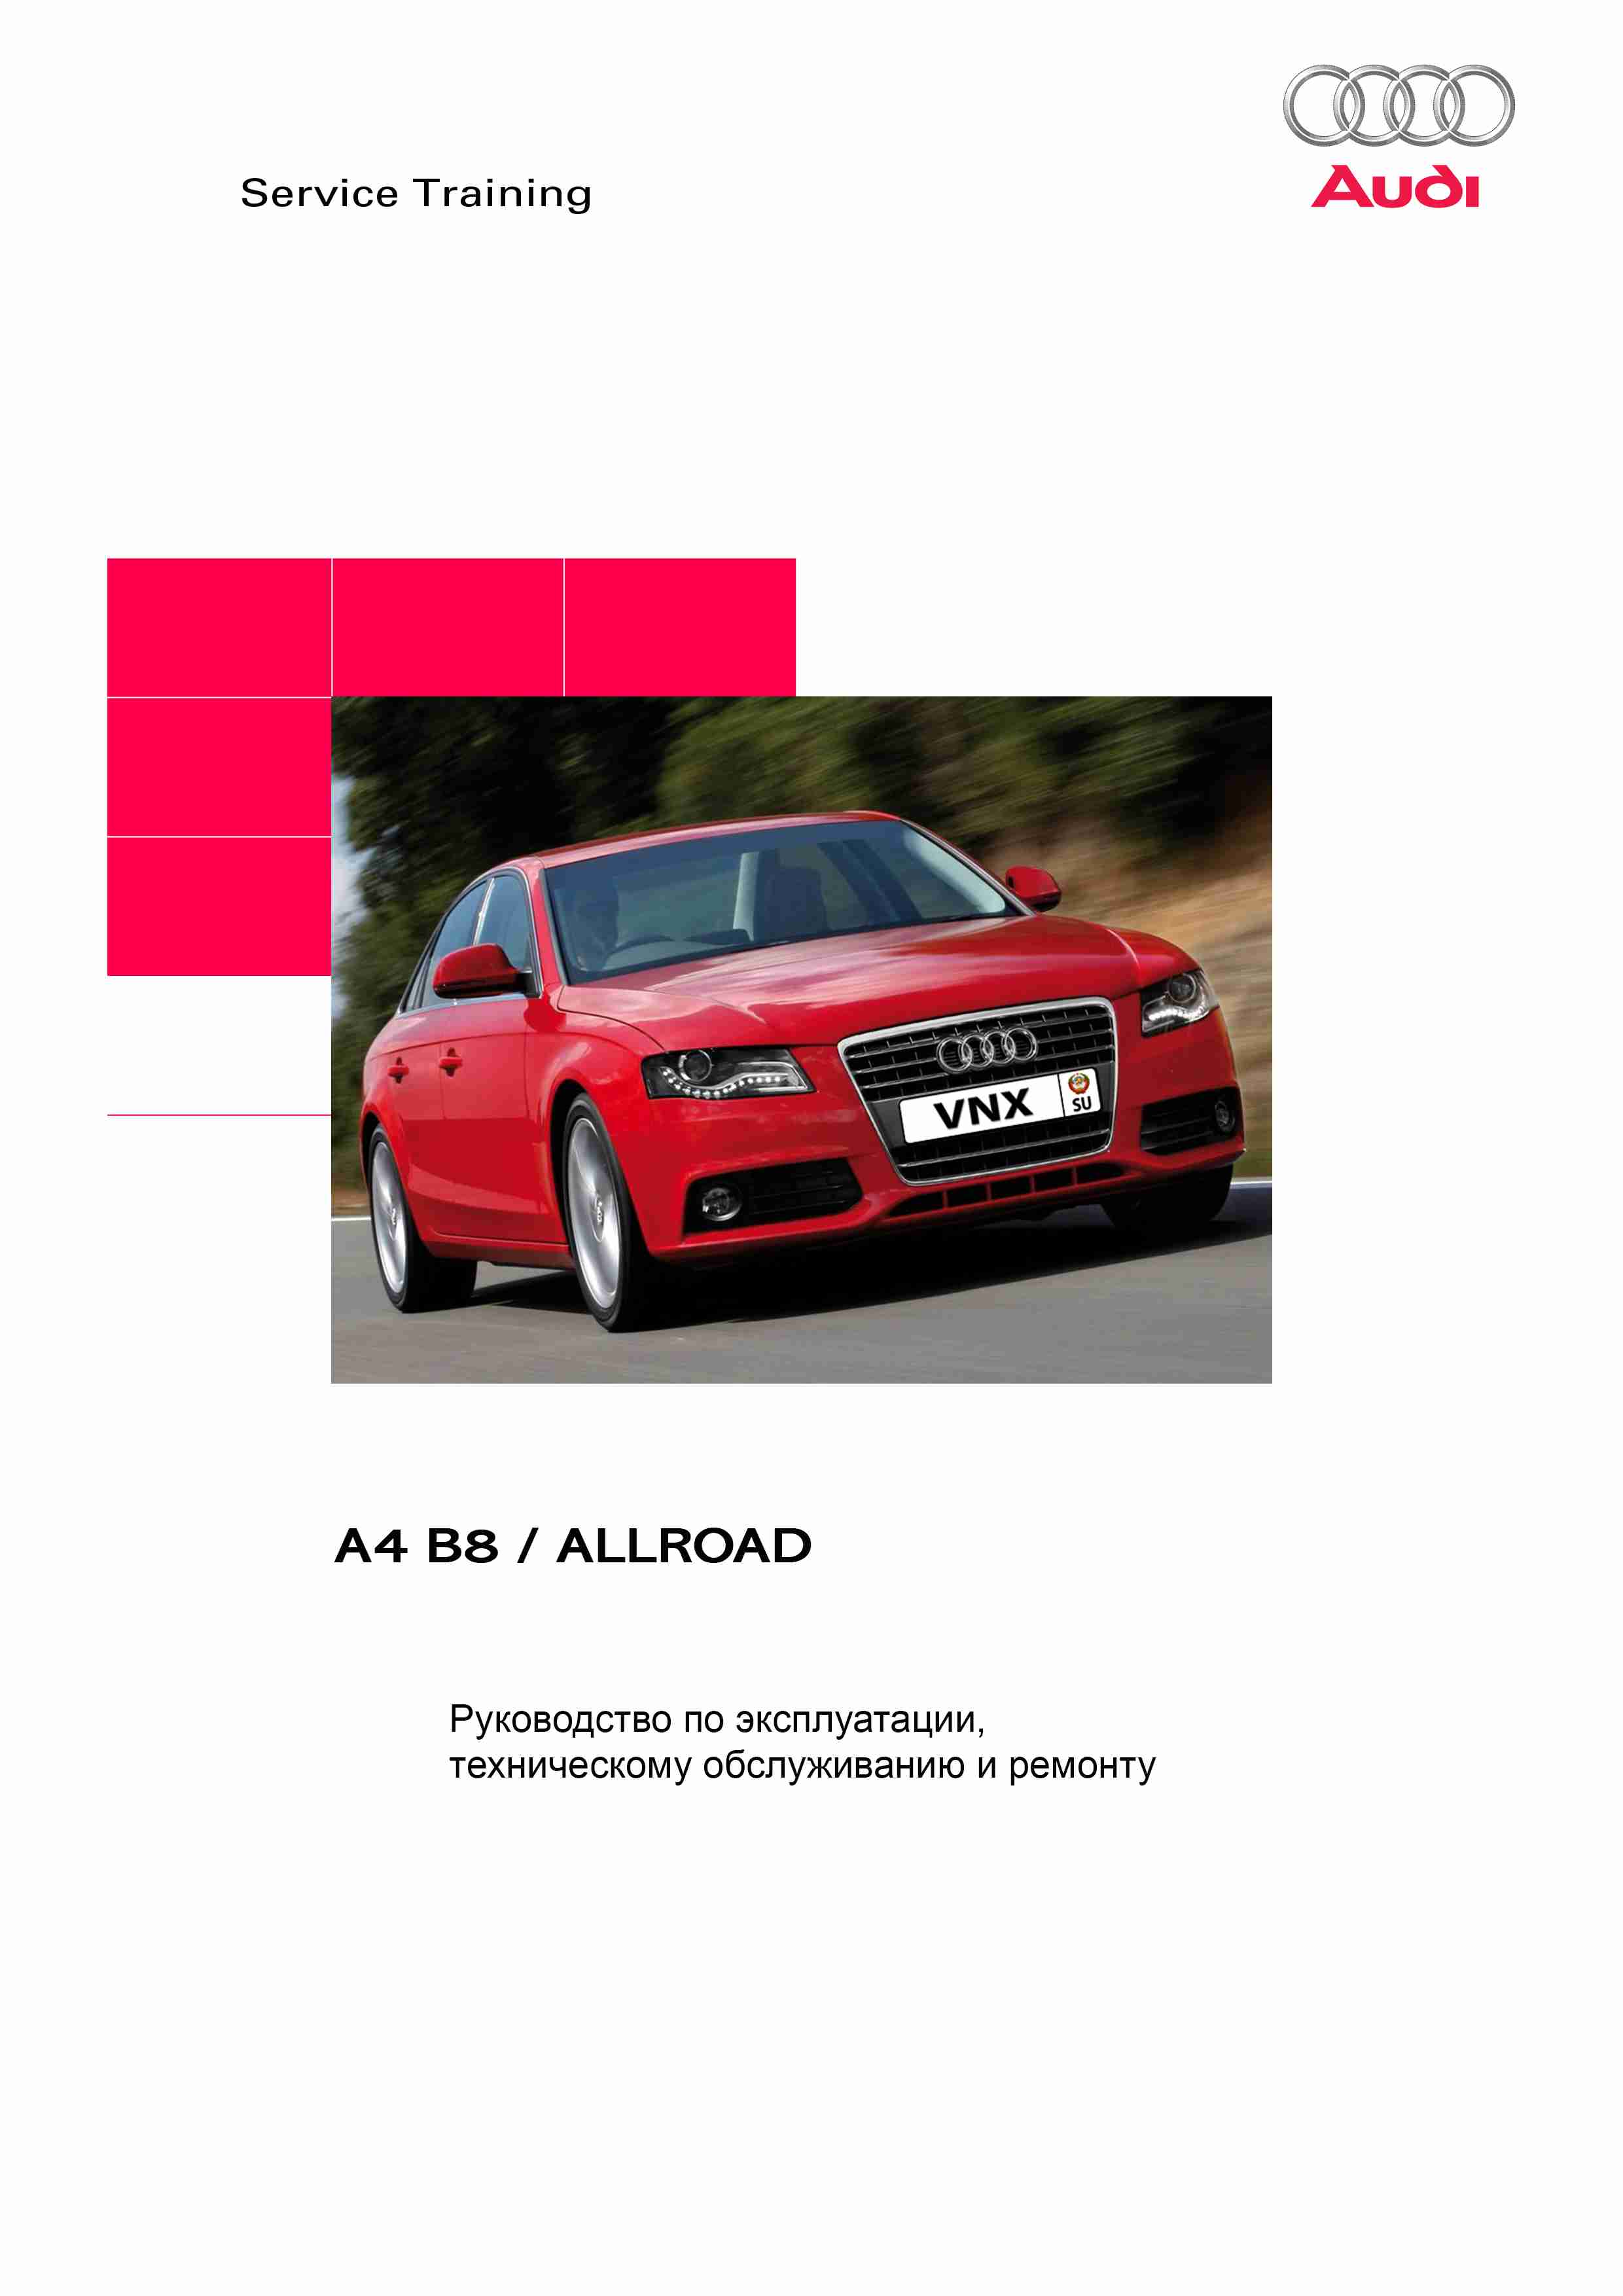 Audi A4 B8 Avant/Allroad Руководство по эксплуатации, ремонту и техническому обслуживанию обложка